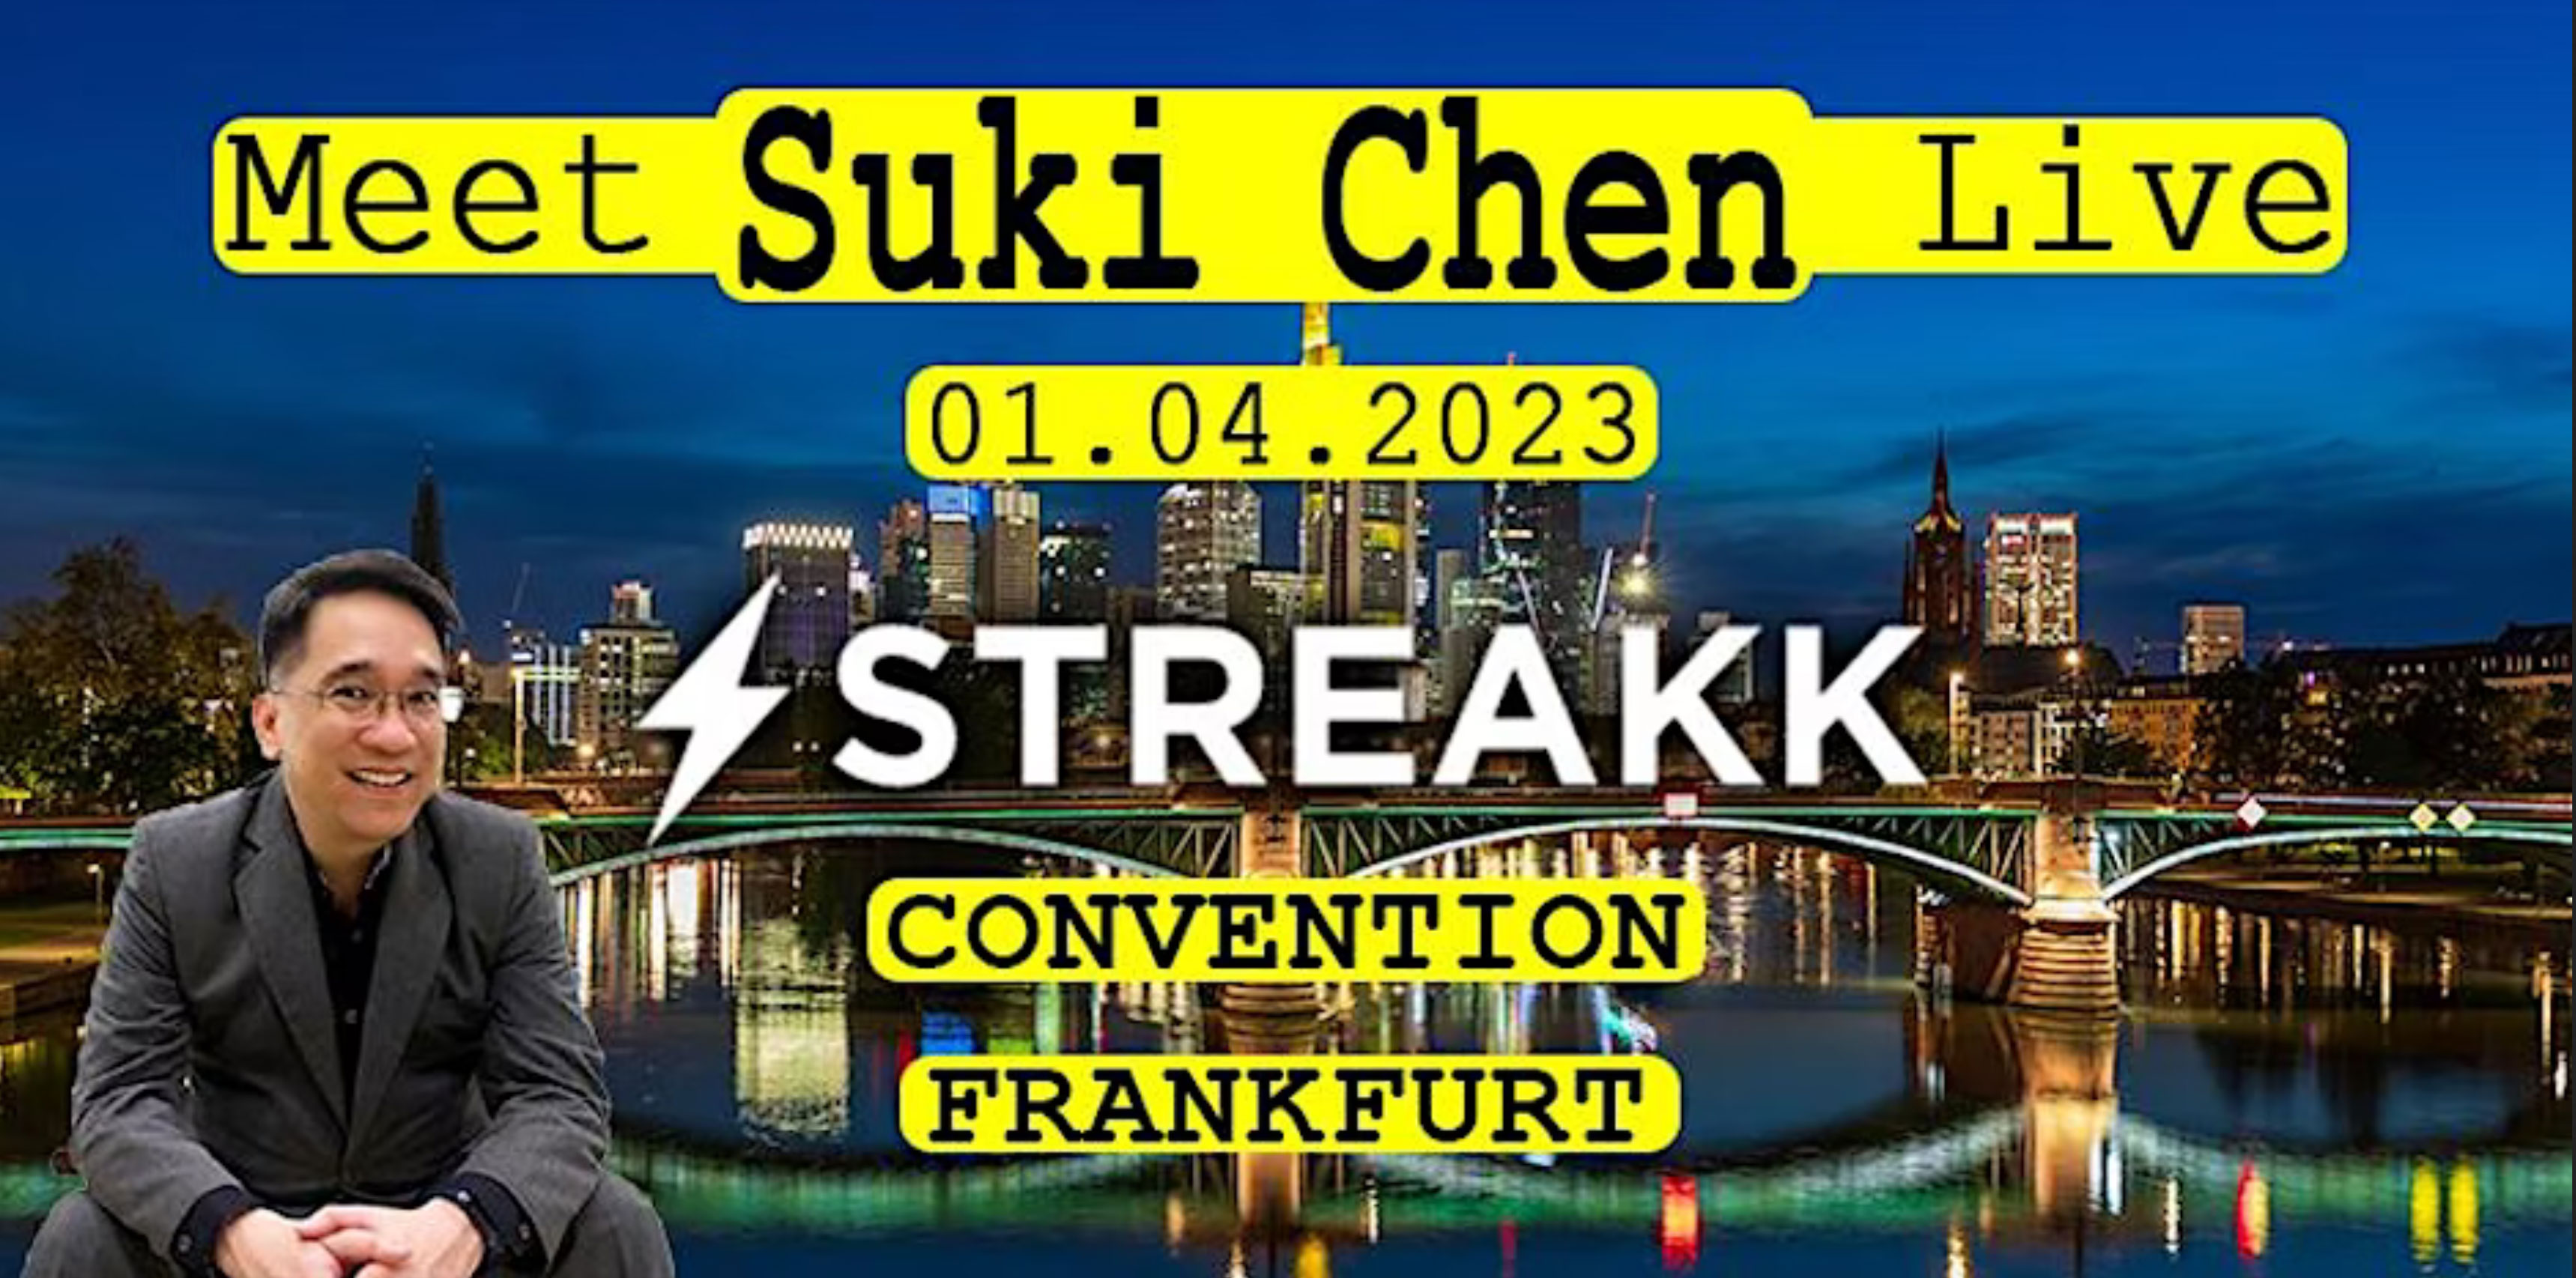 Meet Suki Chen Live in Frankfurt